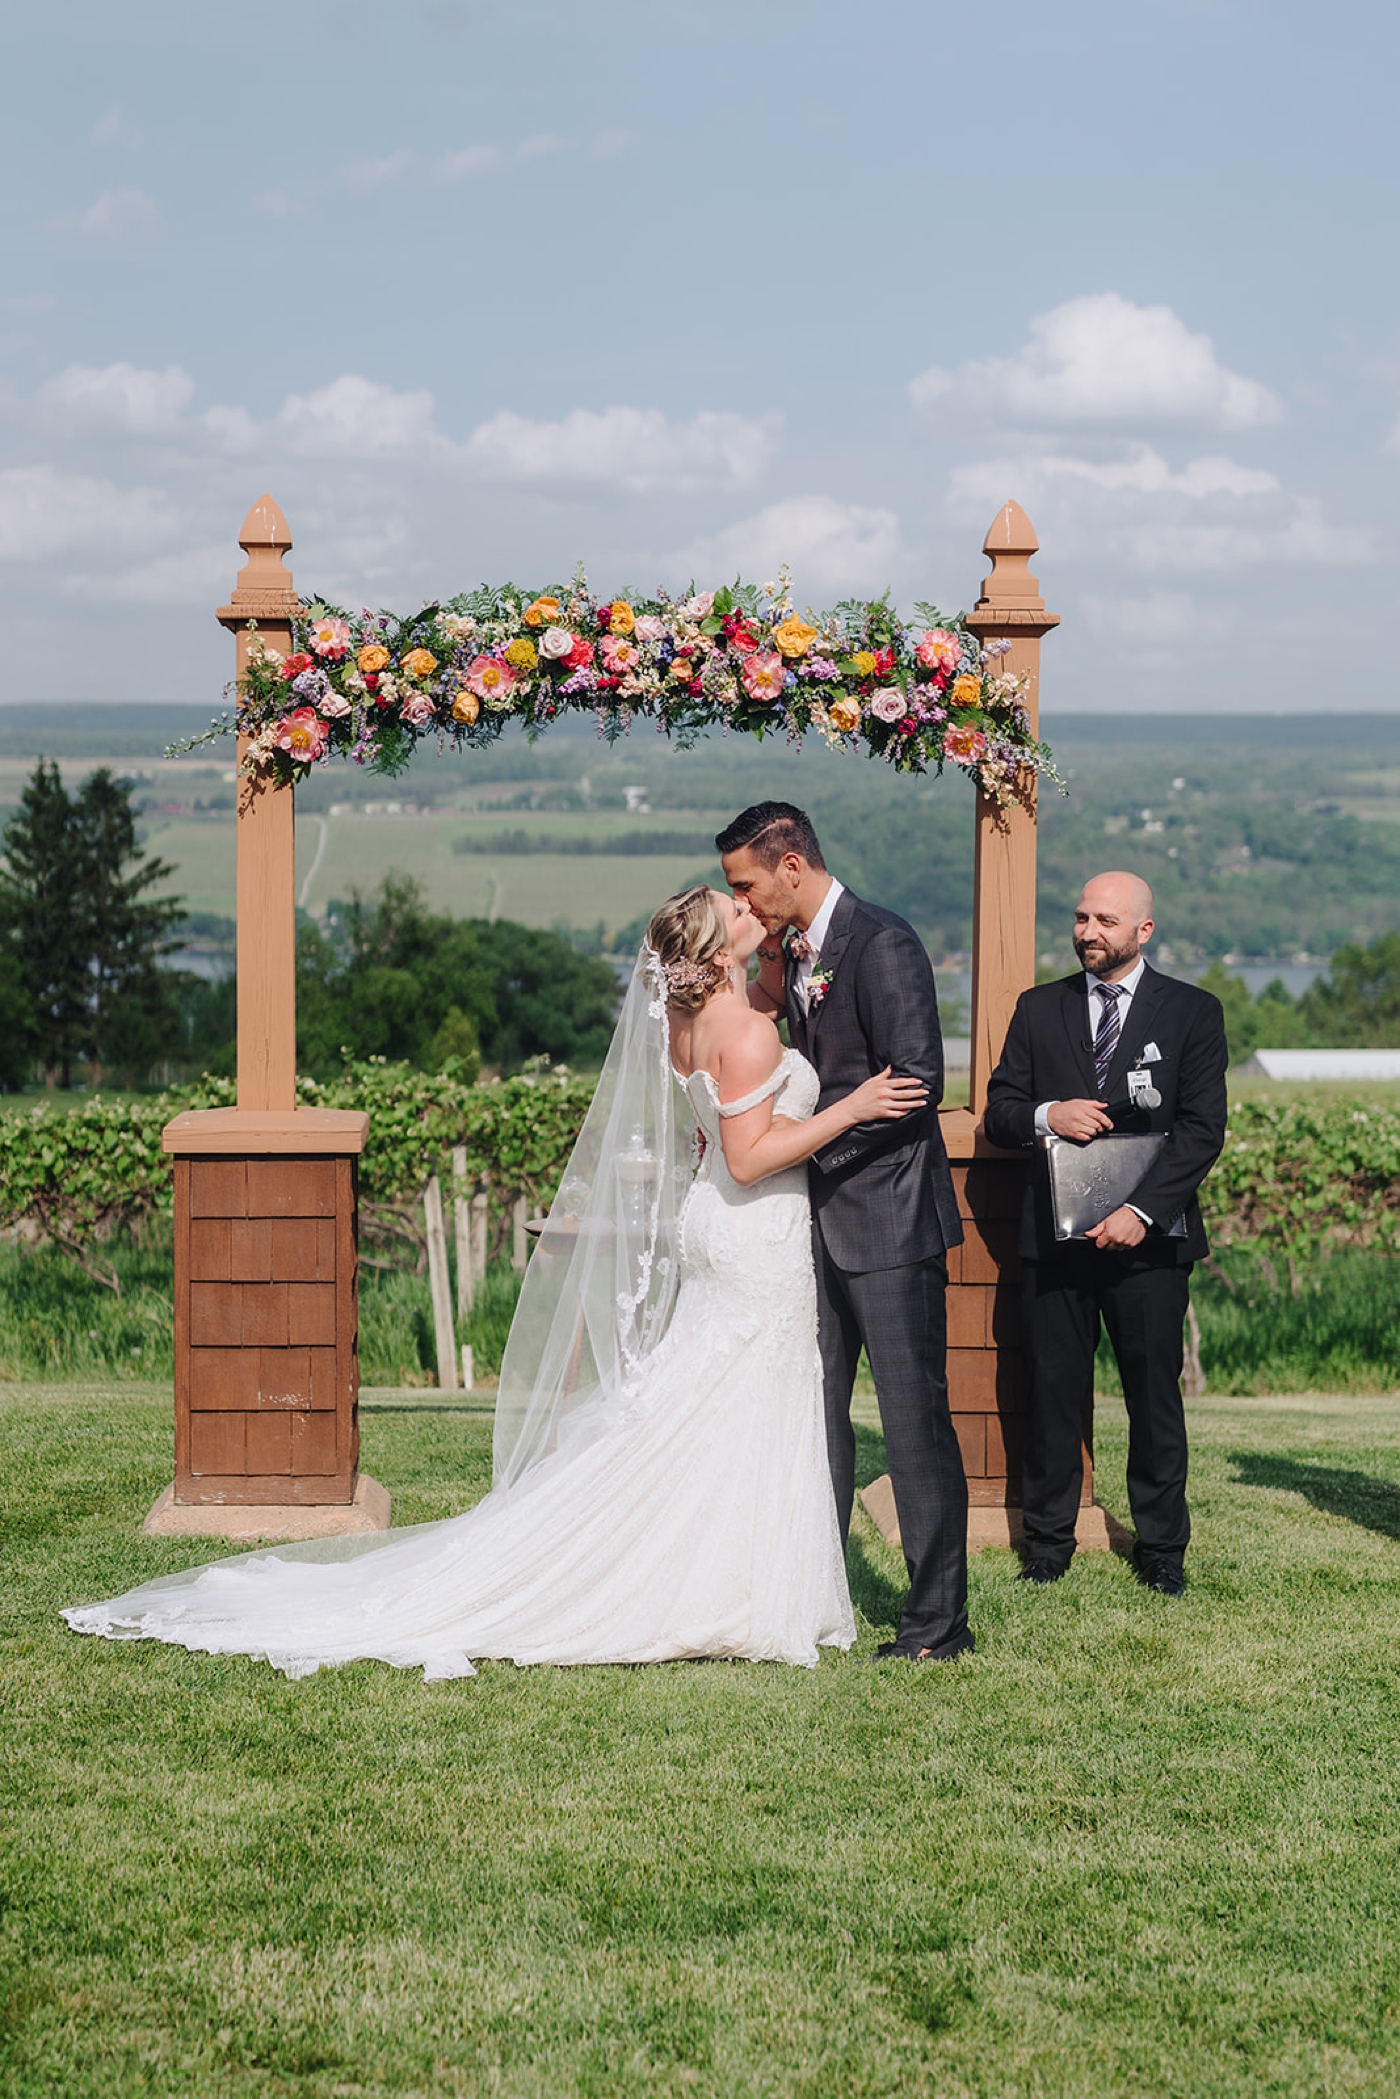 Outdoor wedding ceremony at Glenora Winery